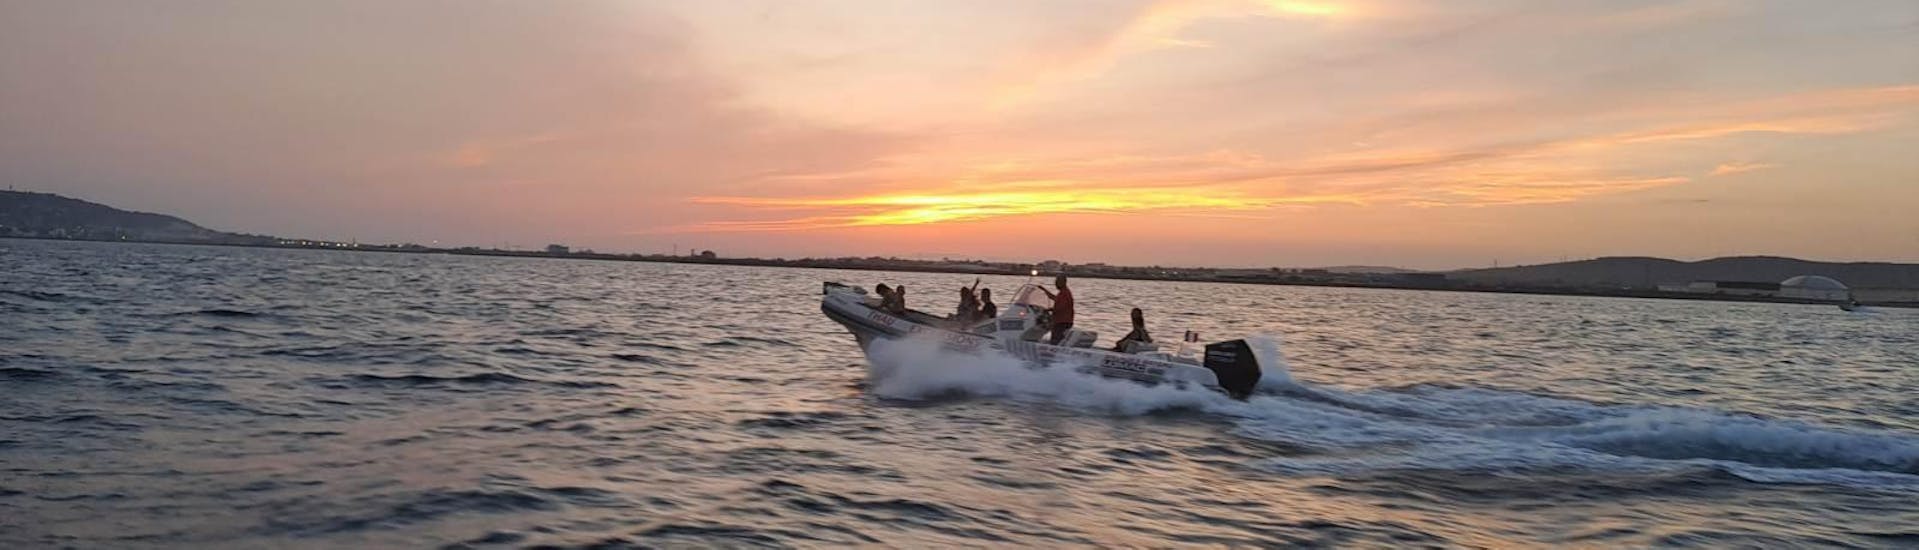 Thau Excursions' RIB boat on the sea at sunset.